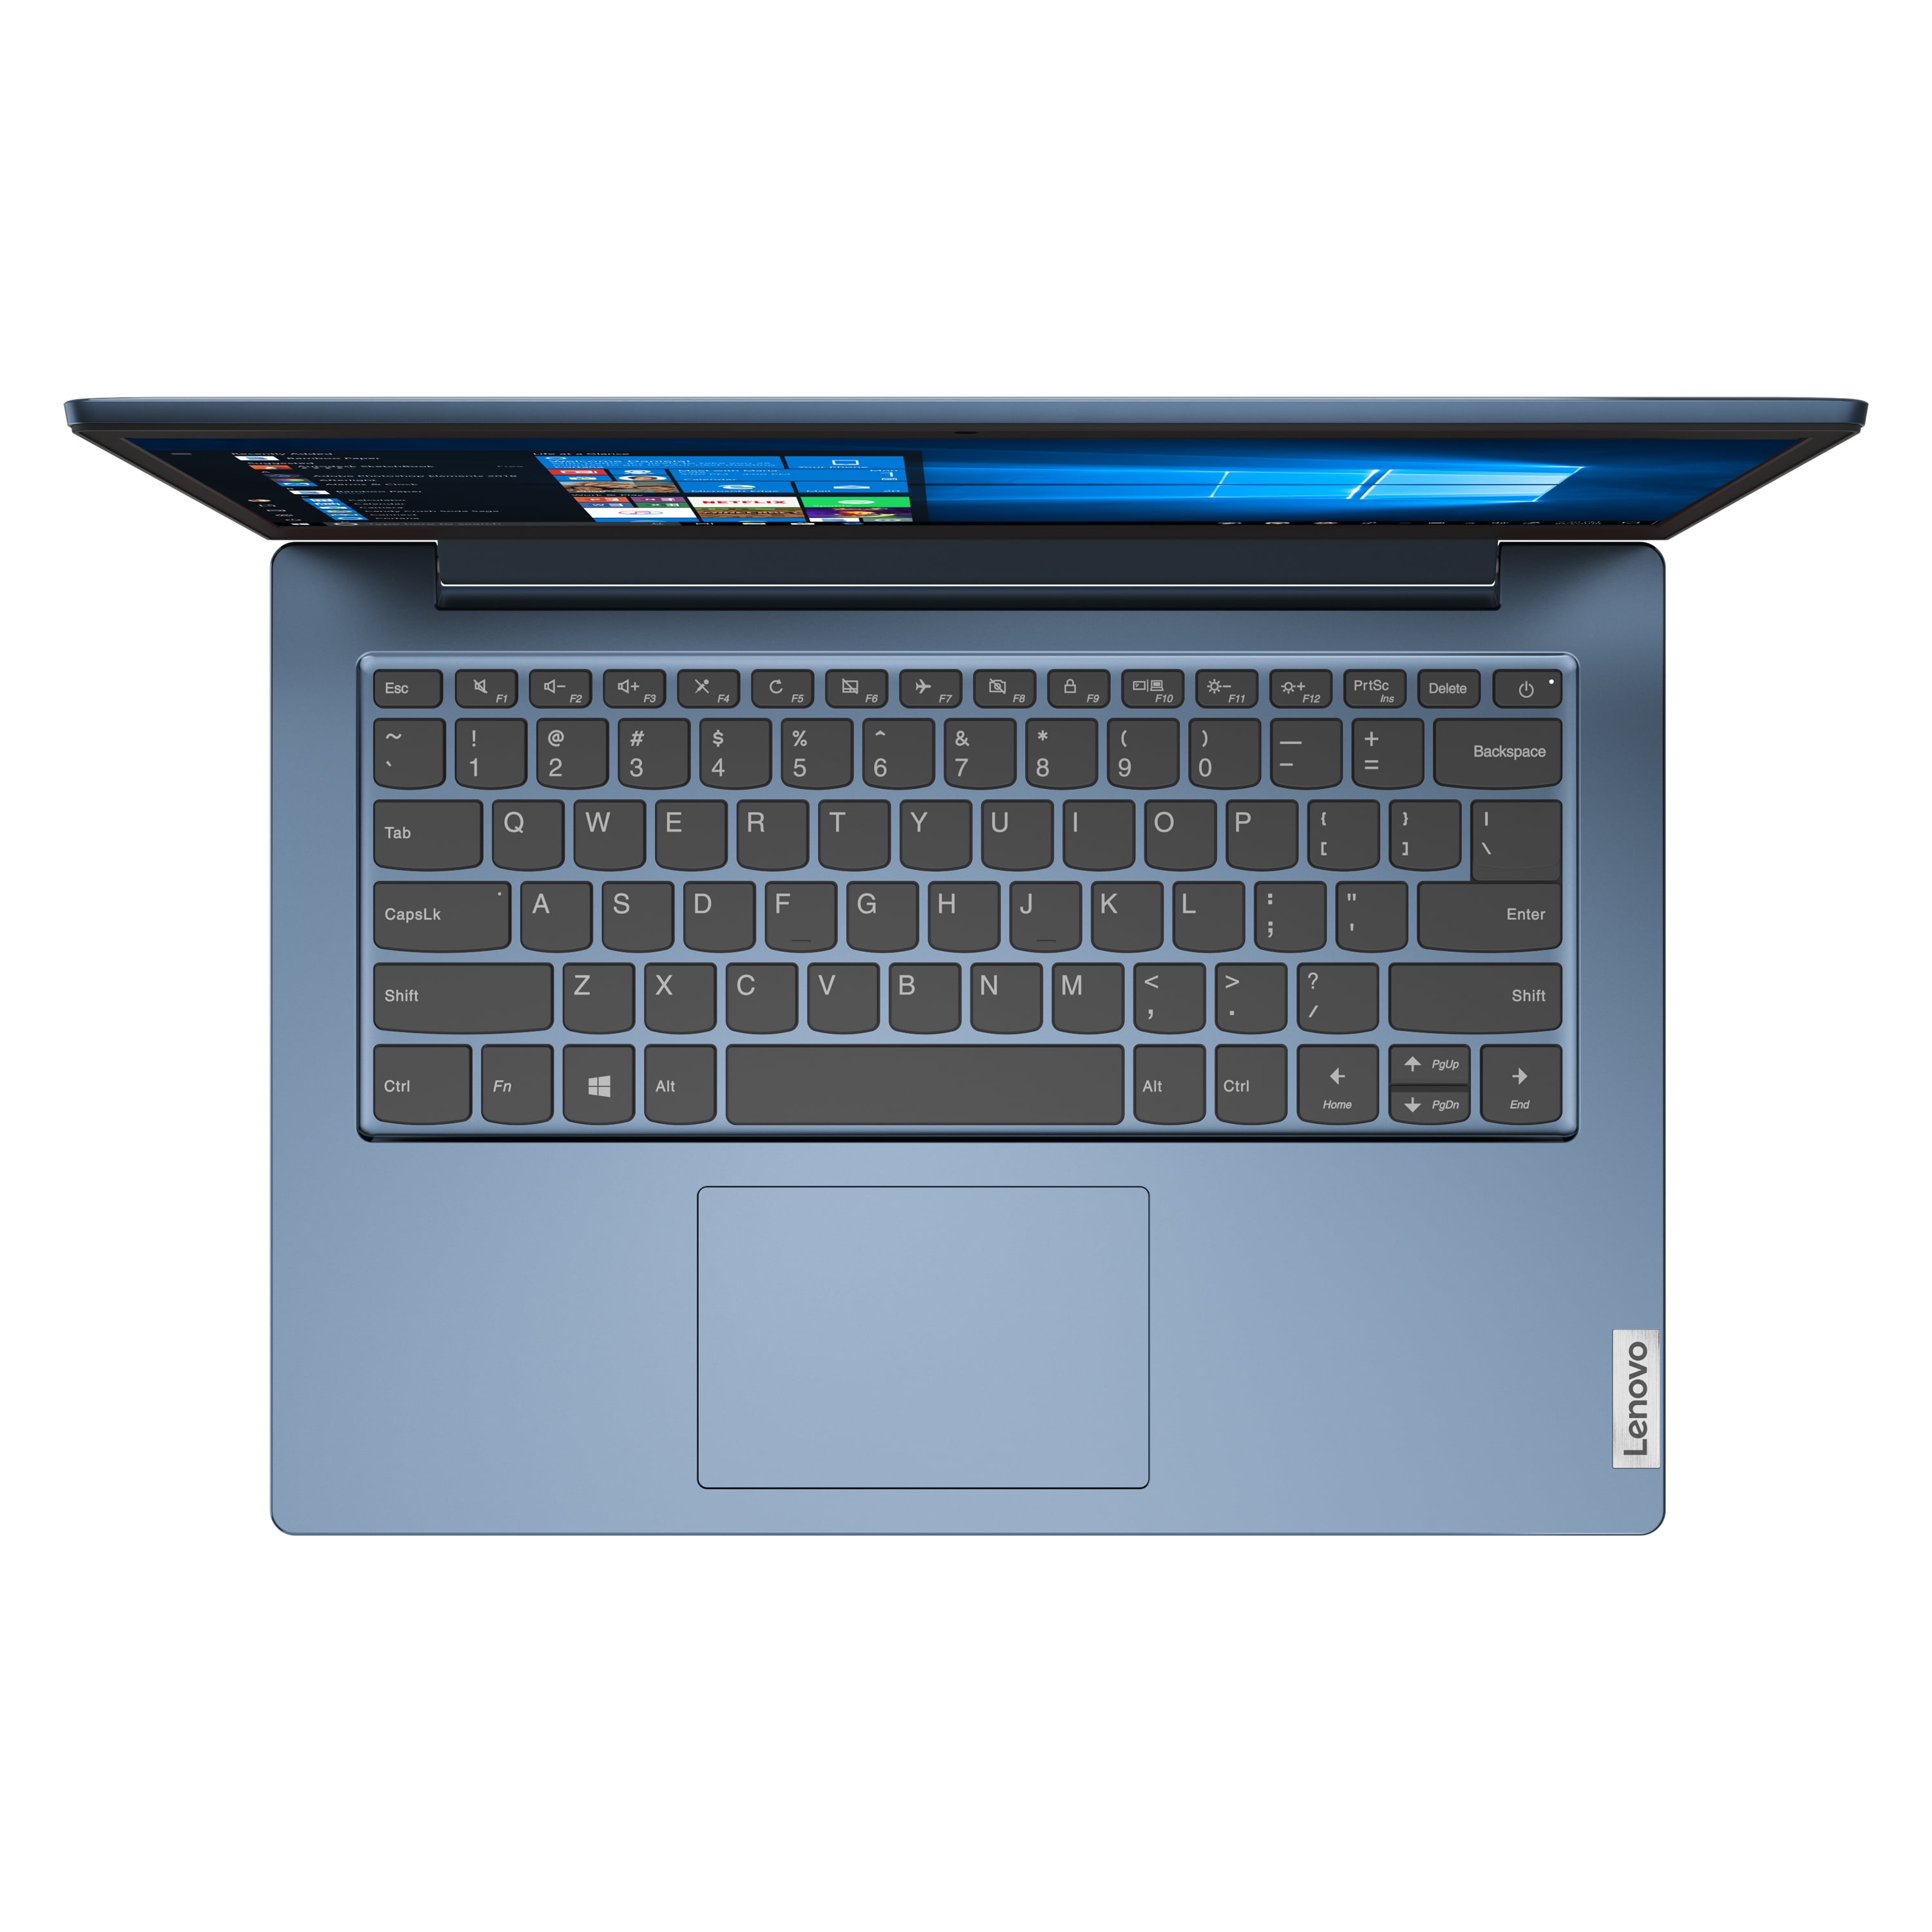 Lenovo S130-14 Laptop PC Intel N4000 4GB 64GB SSD 14 Display Windows 10 Blue 